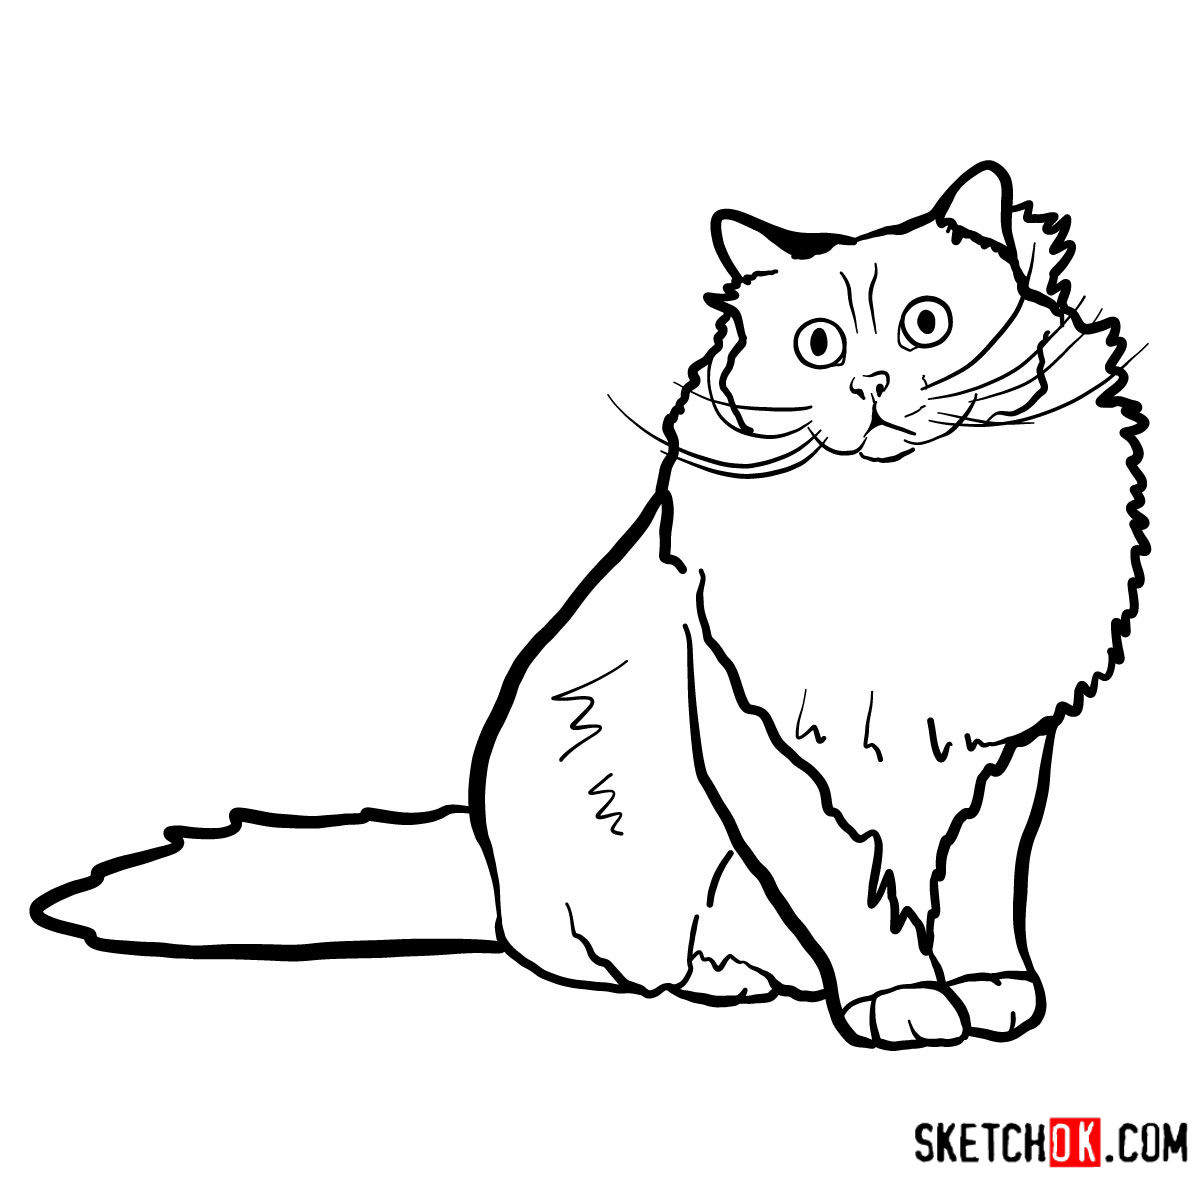 How to draw the Birman cat - step 08